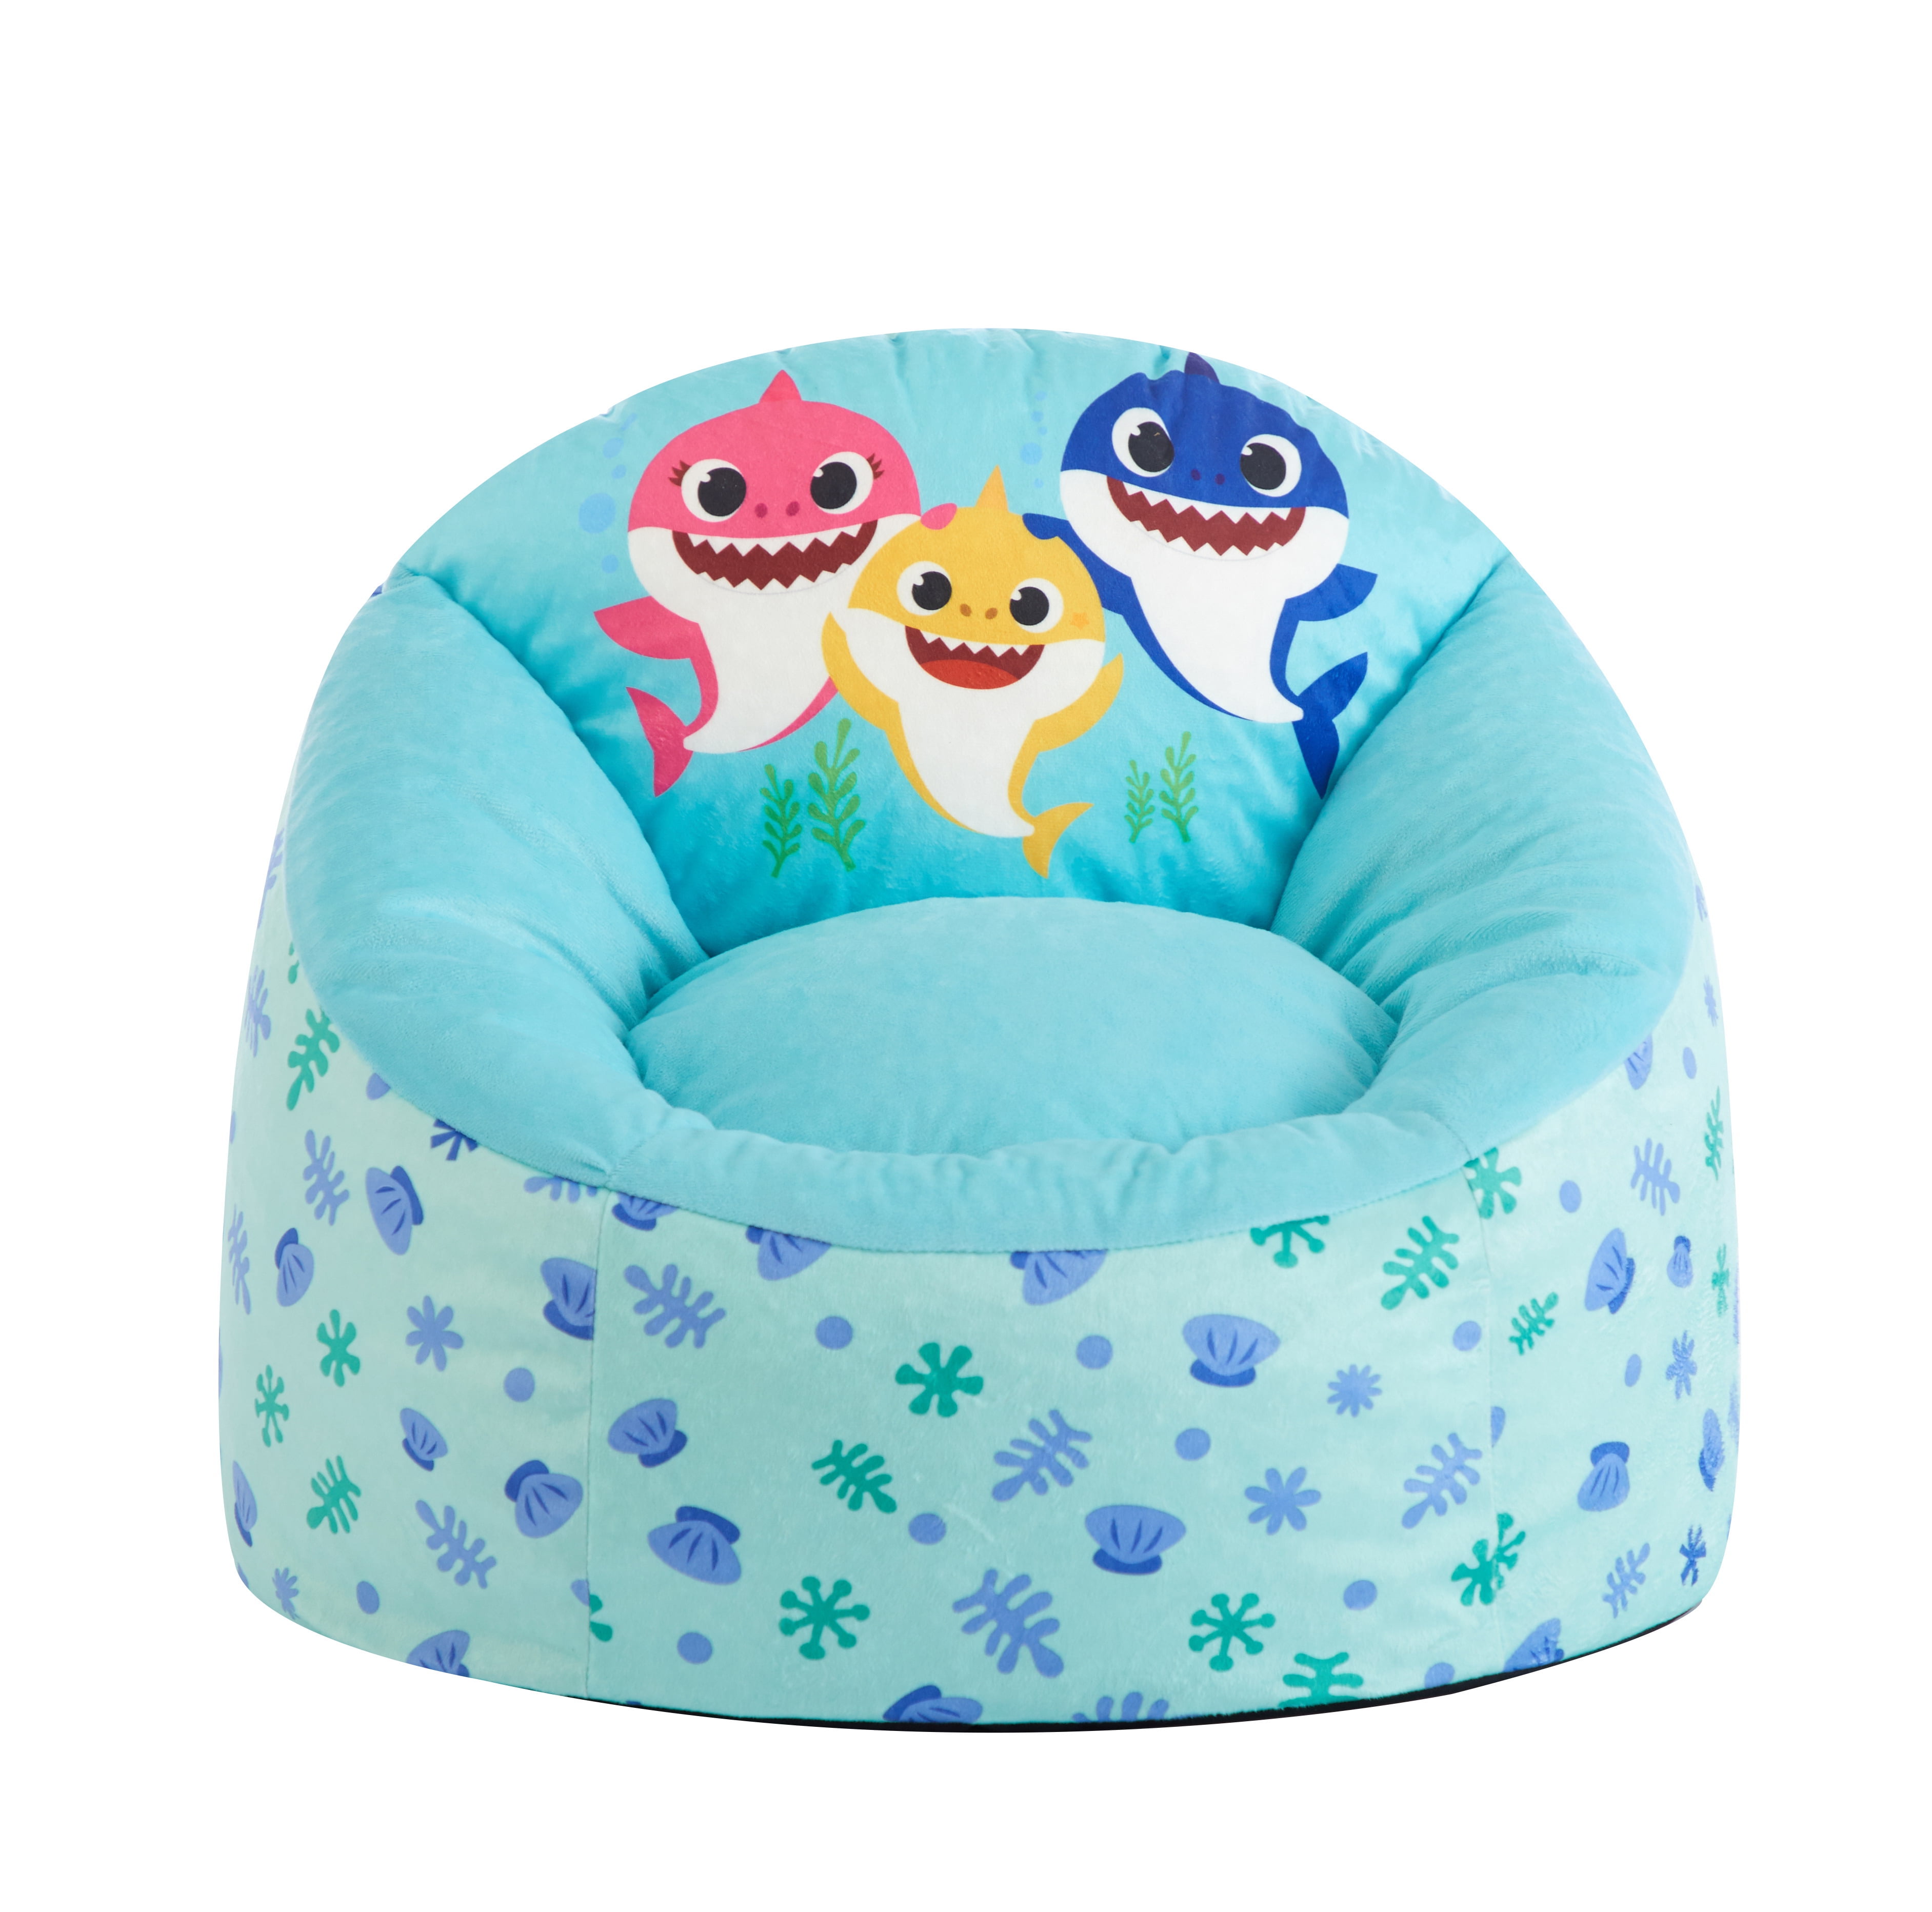 Baby Bean Bag Adjustable Harness Kids Toddler Chair PUG DESIGN Bouncer Beanbag 